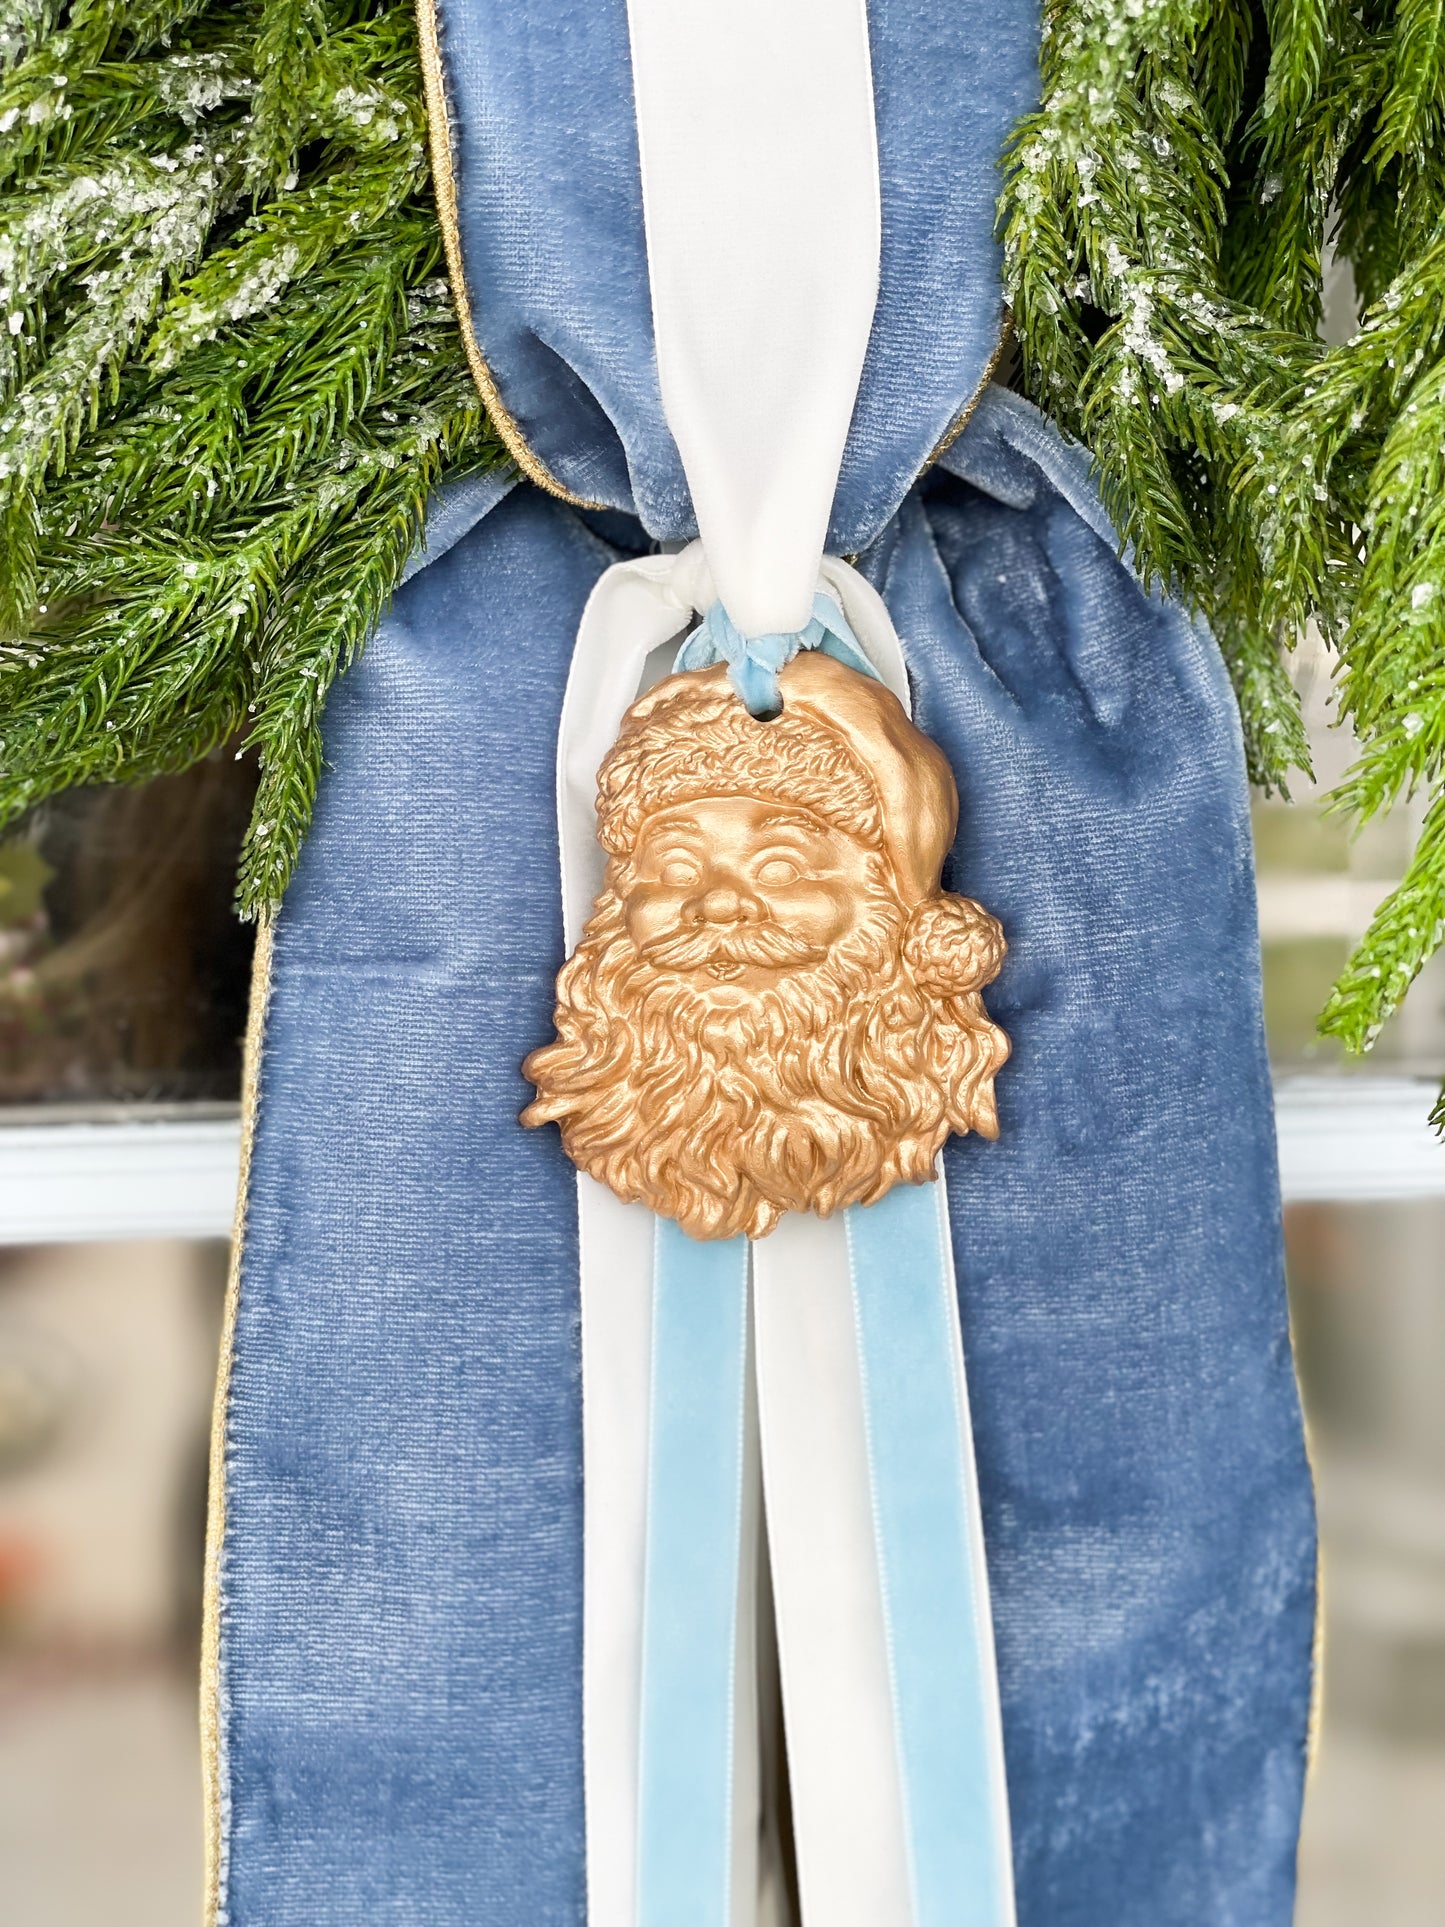 The Blue Believe Iced Fir Pine Wreath With Sash And Santa